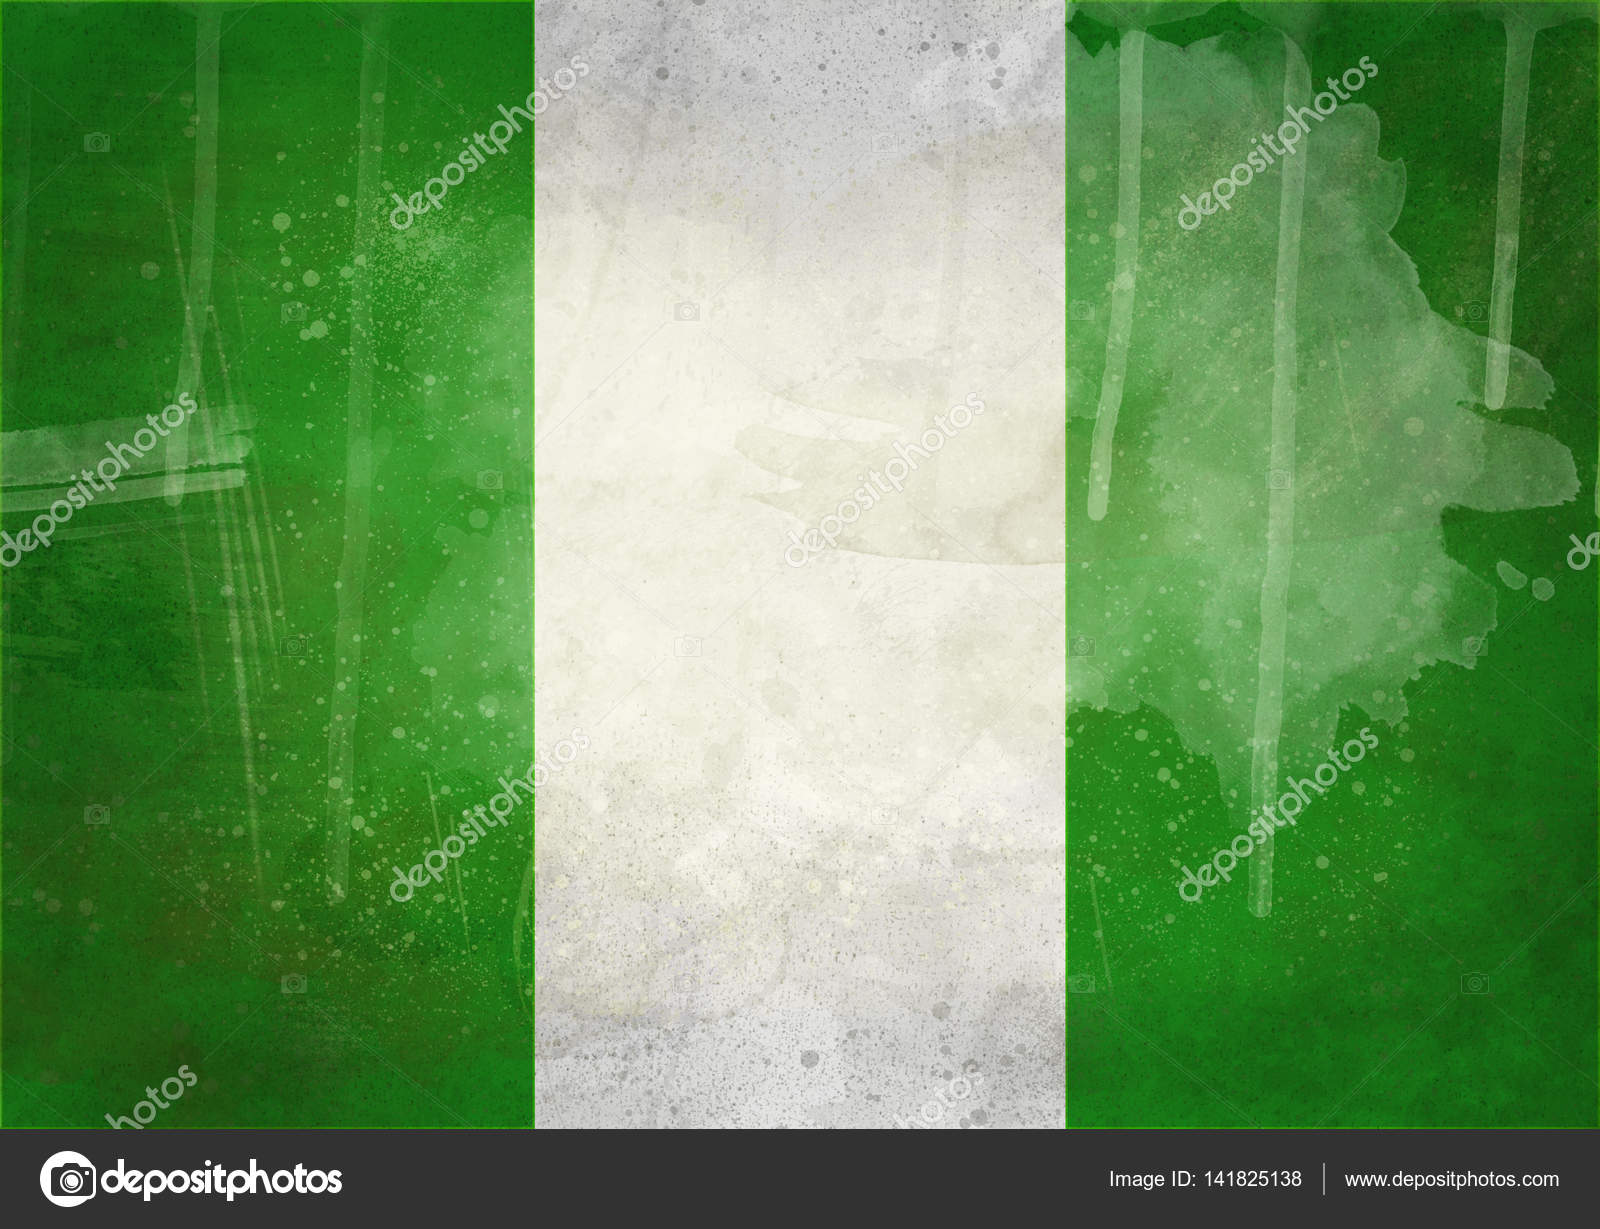 nigeria grunge flag illustration — Stock Photo © MrsWilkins #141825138